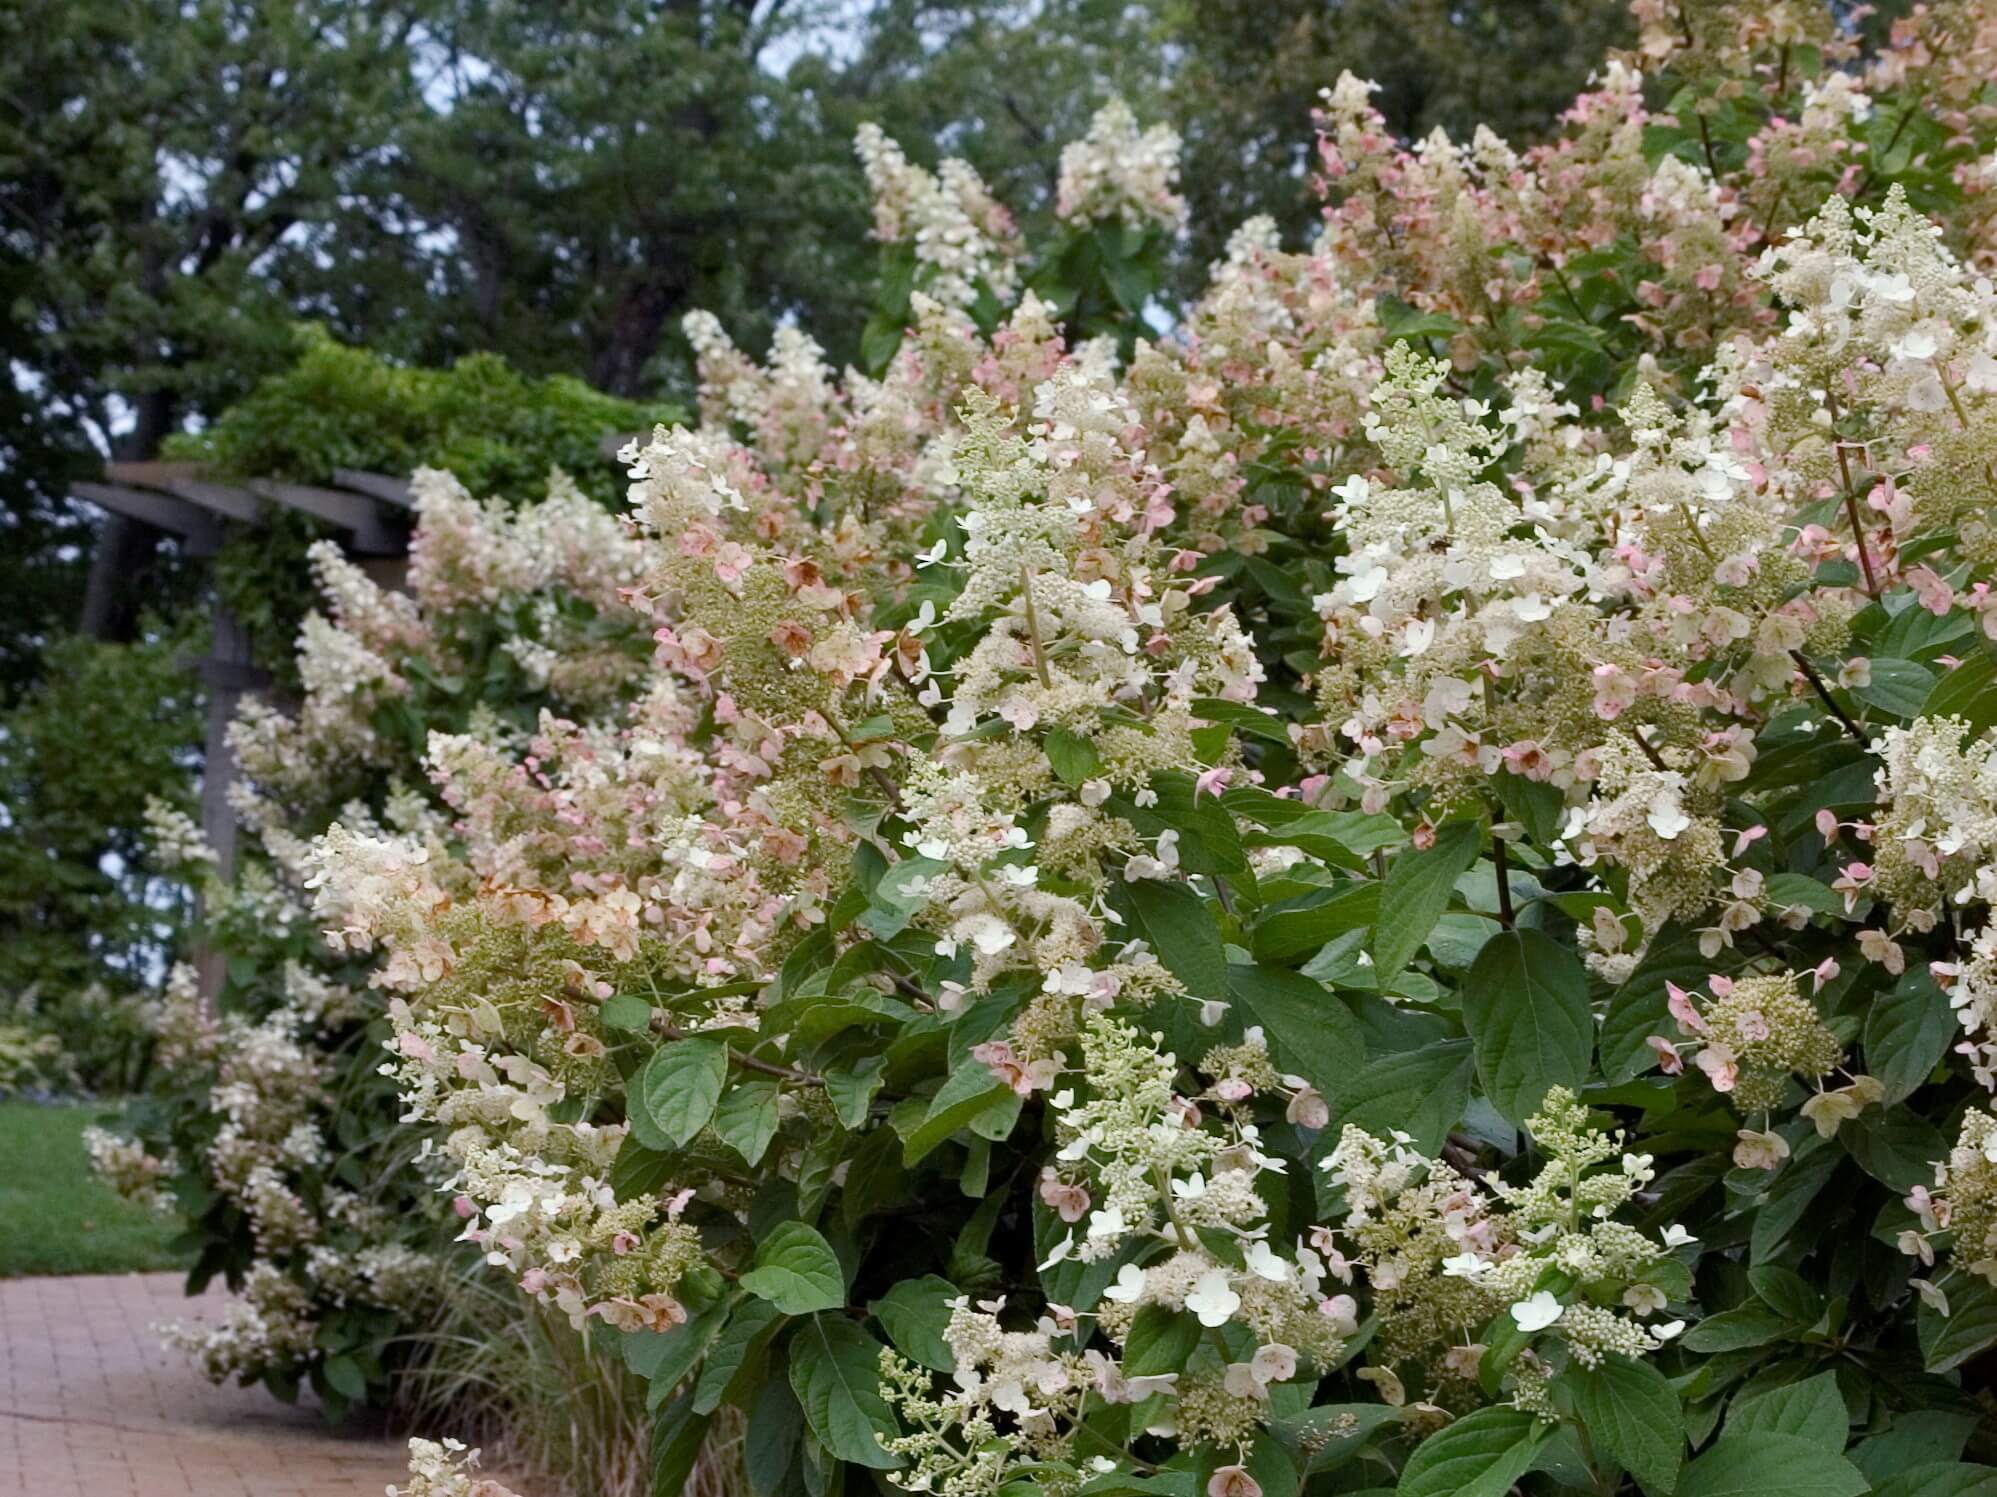 Hydrangea, Panicle Late Blooming